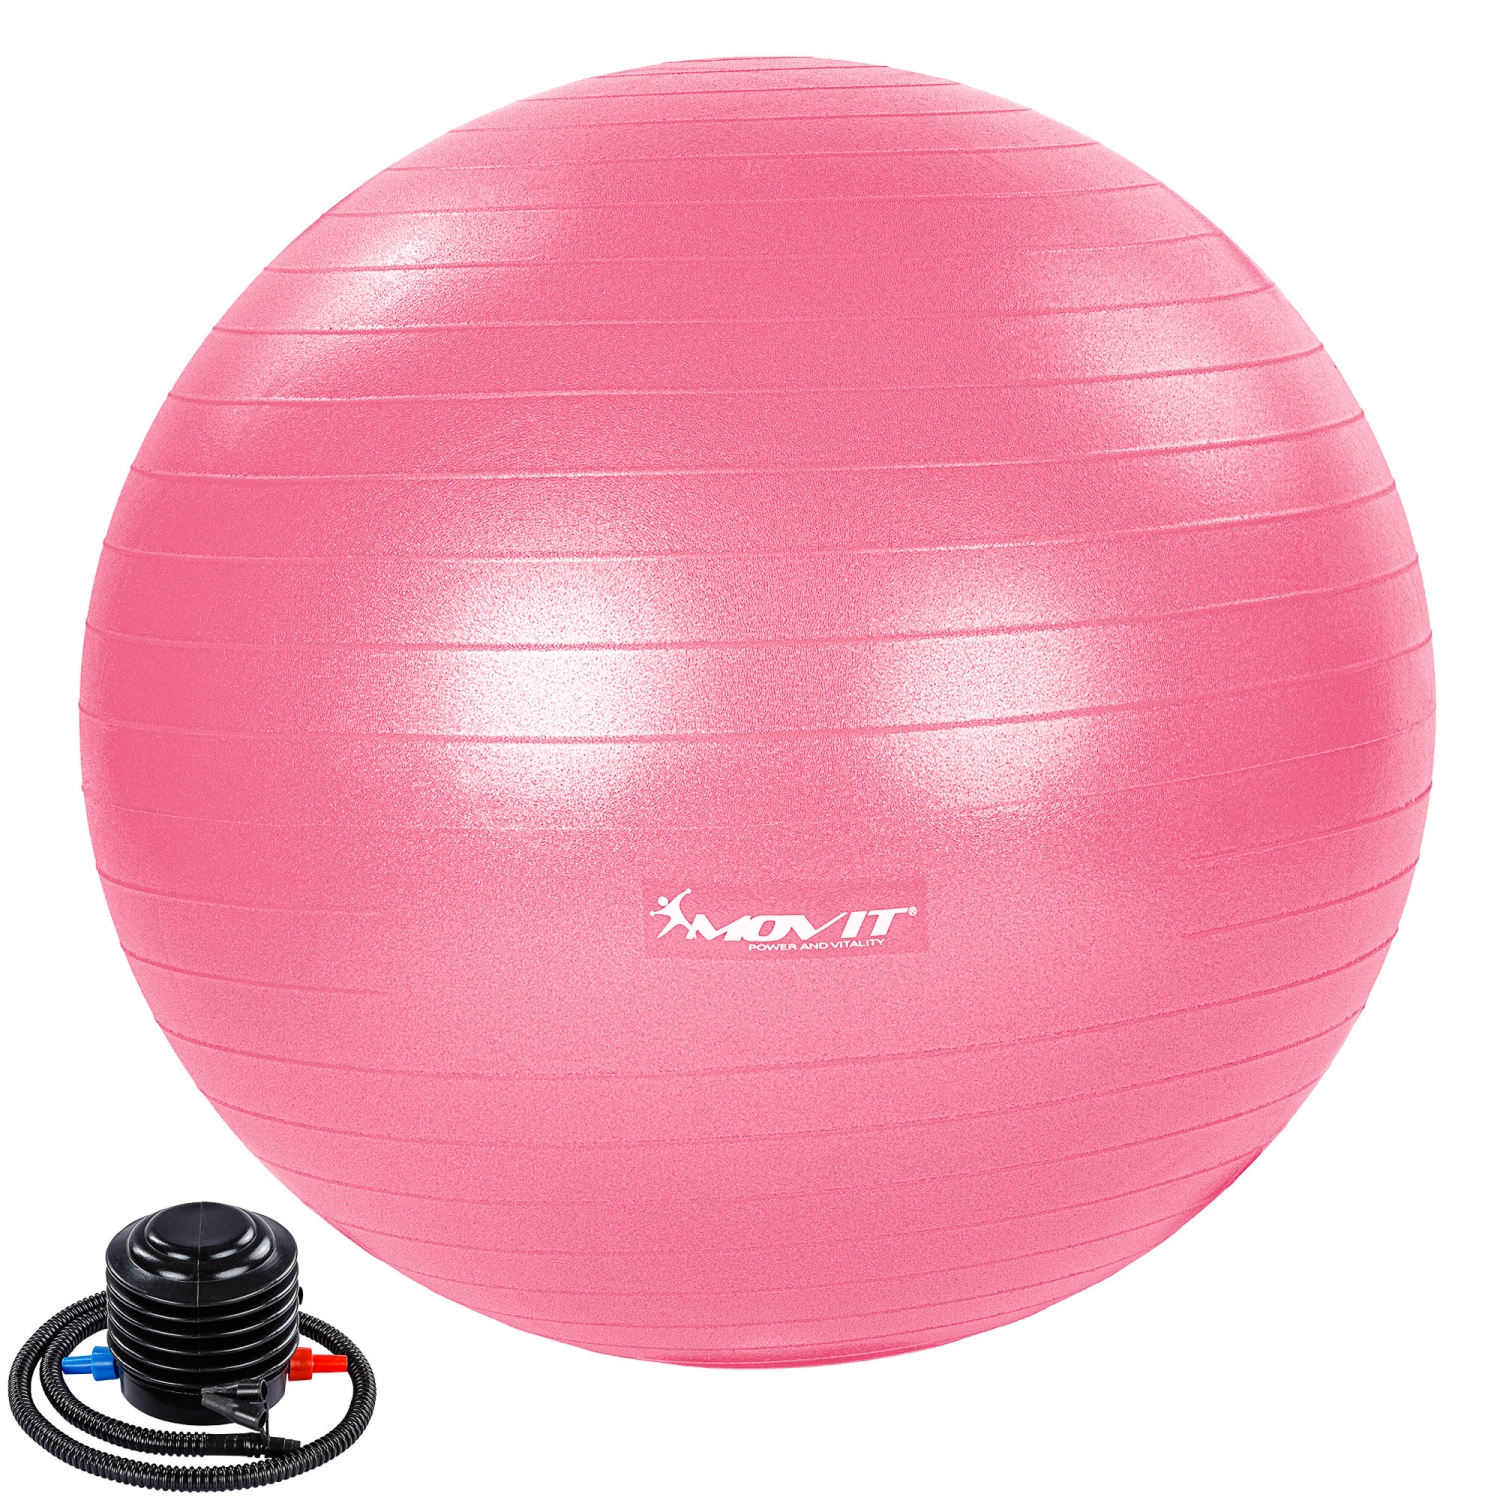 Yoga bal – Pilates bal – Fitness bal – 55 cm – Inclusief pomp – Roze